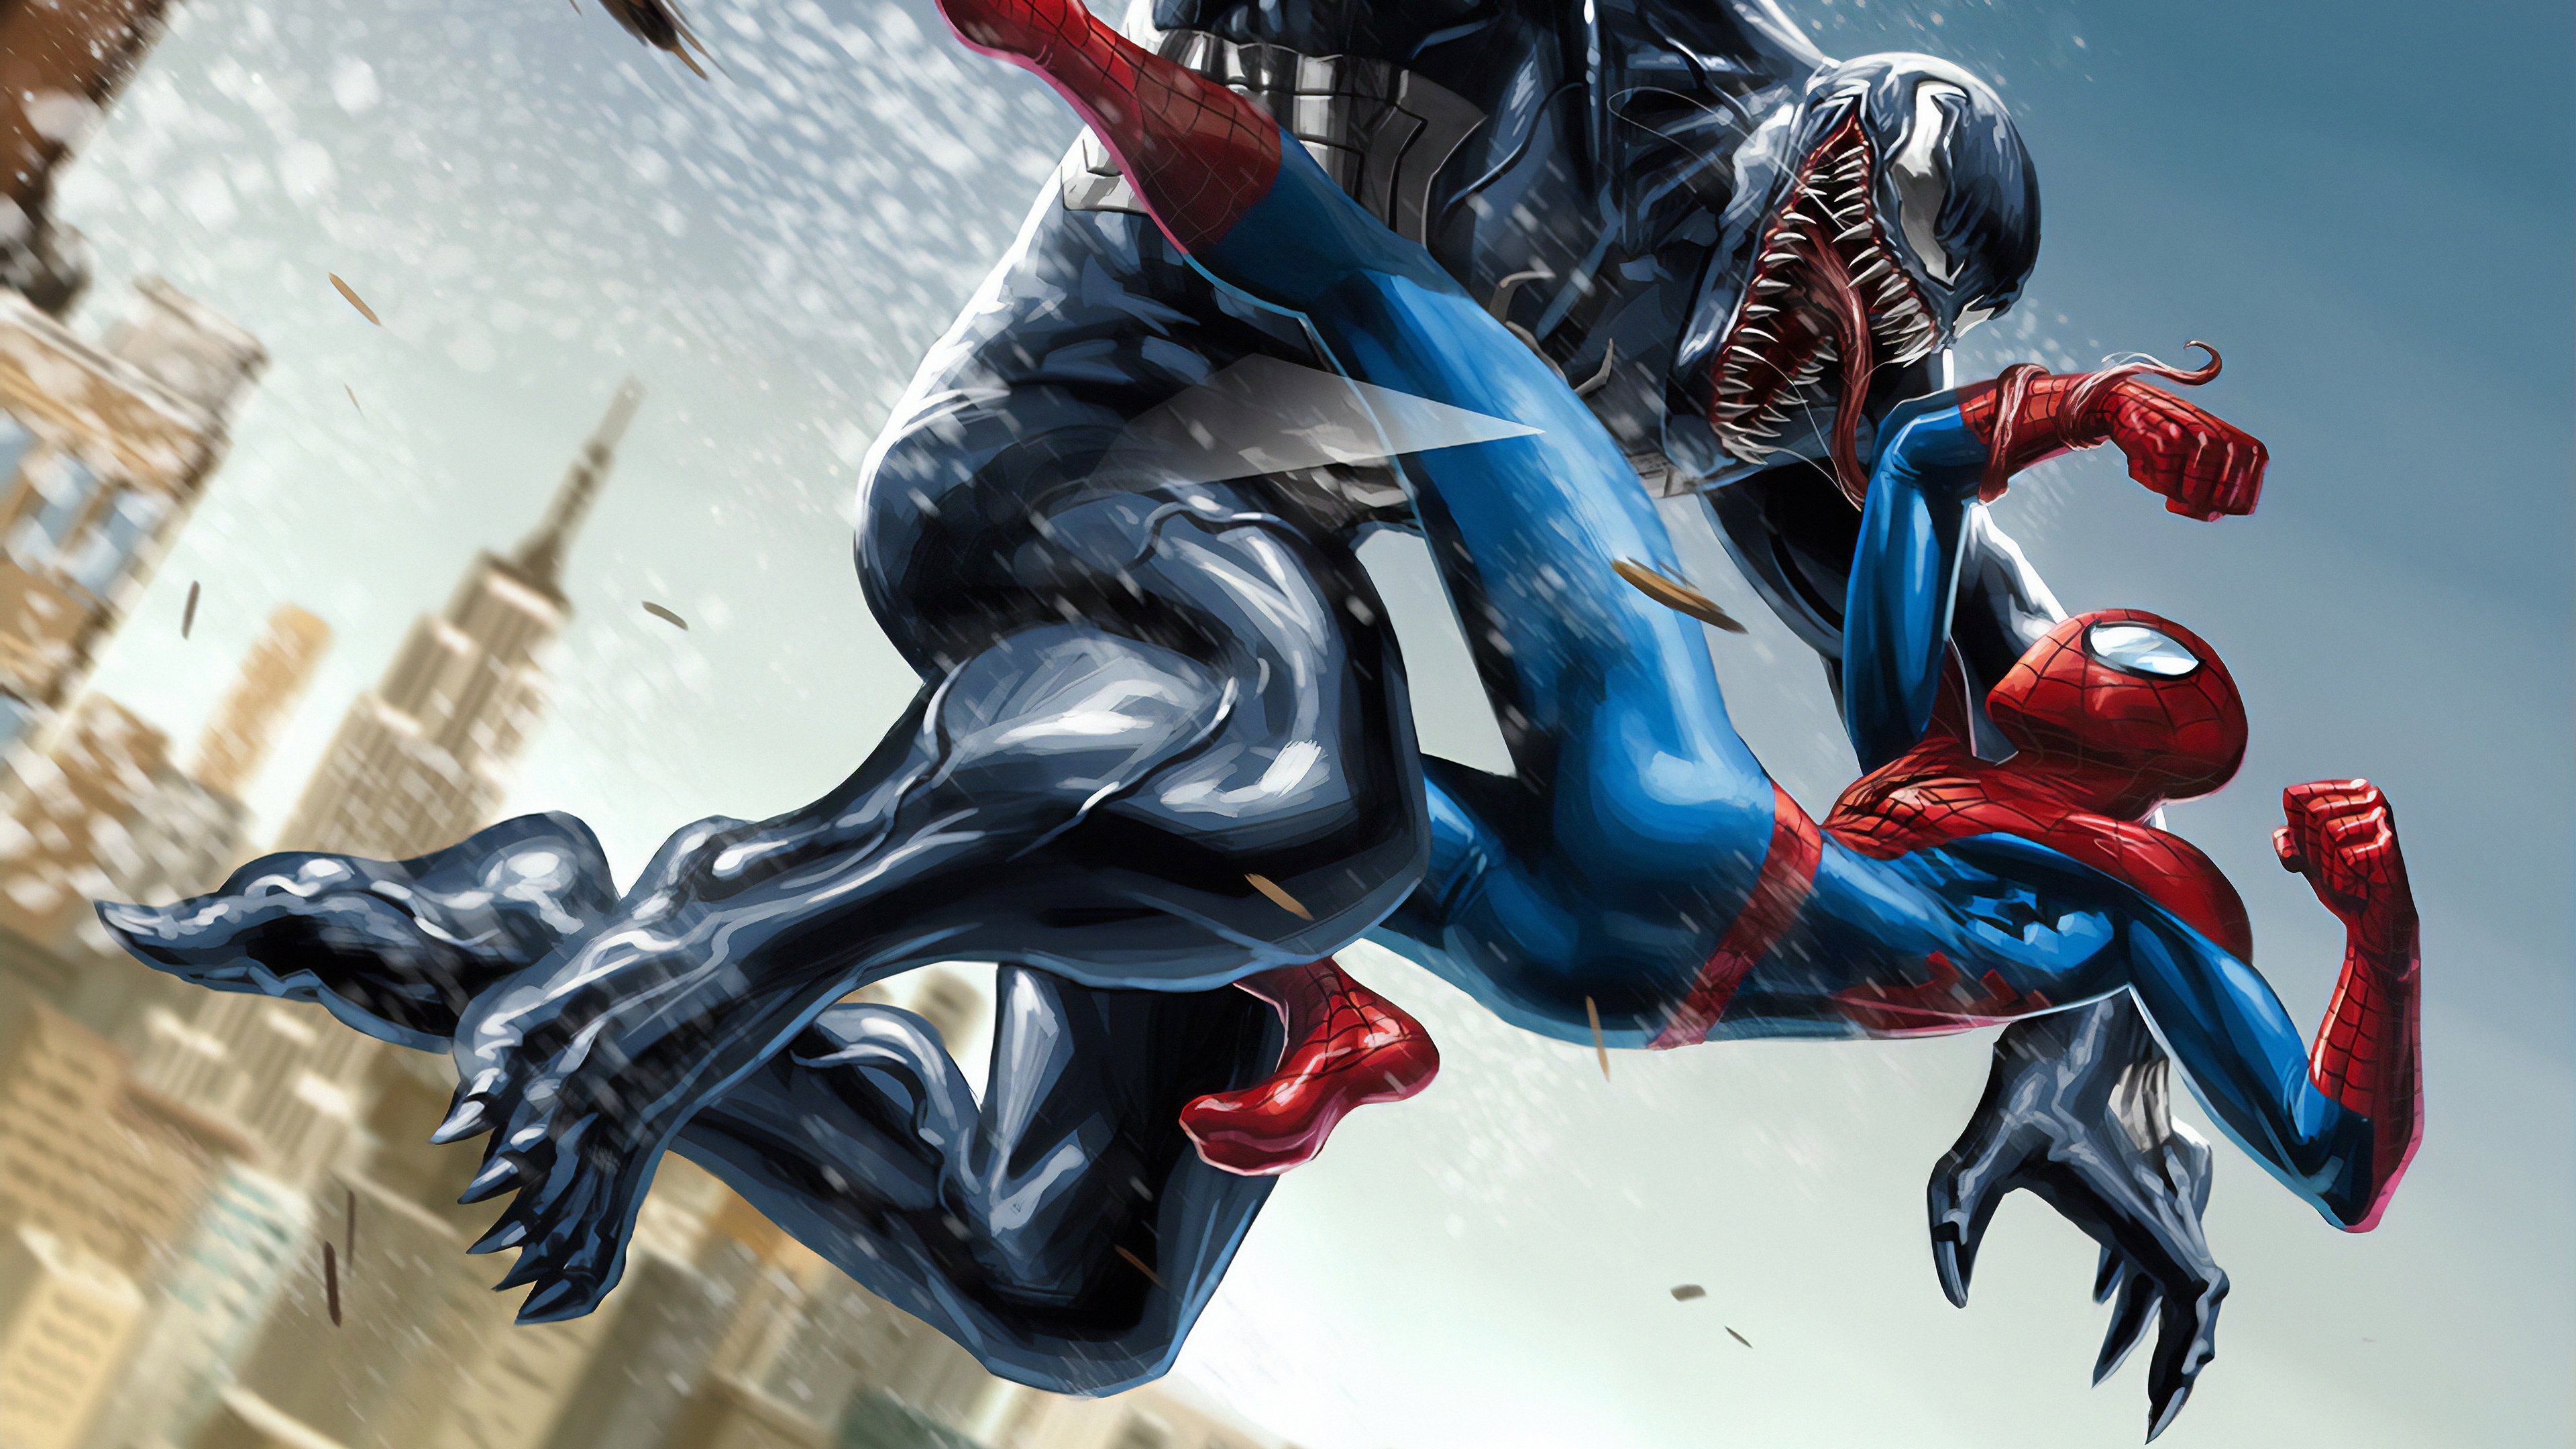 Venom Spiderman 4k, HD Superheroes, 4k Wallpapers, Image, Backgrounds, Phot...